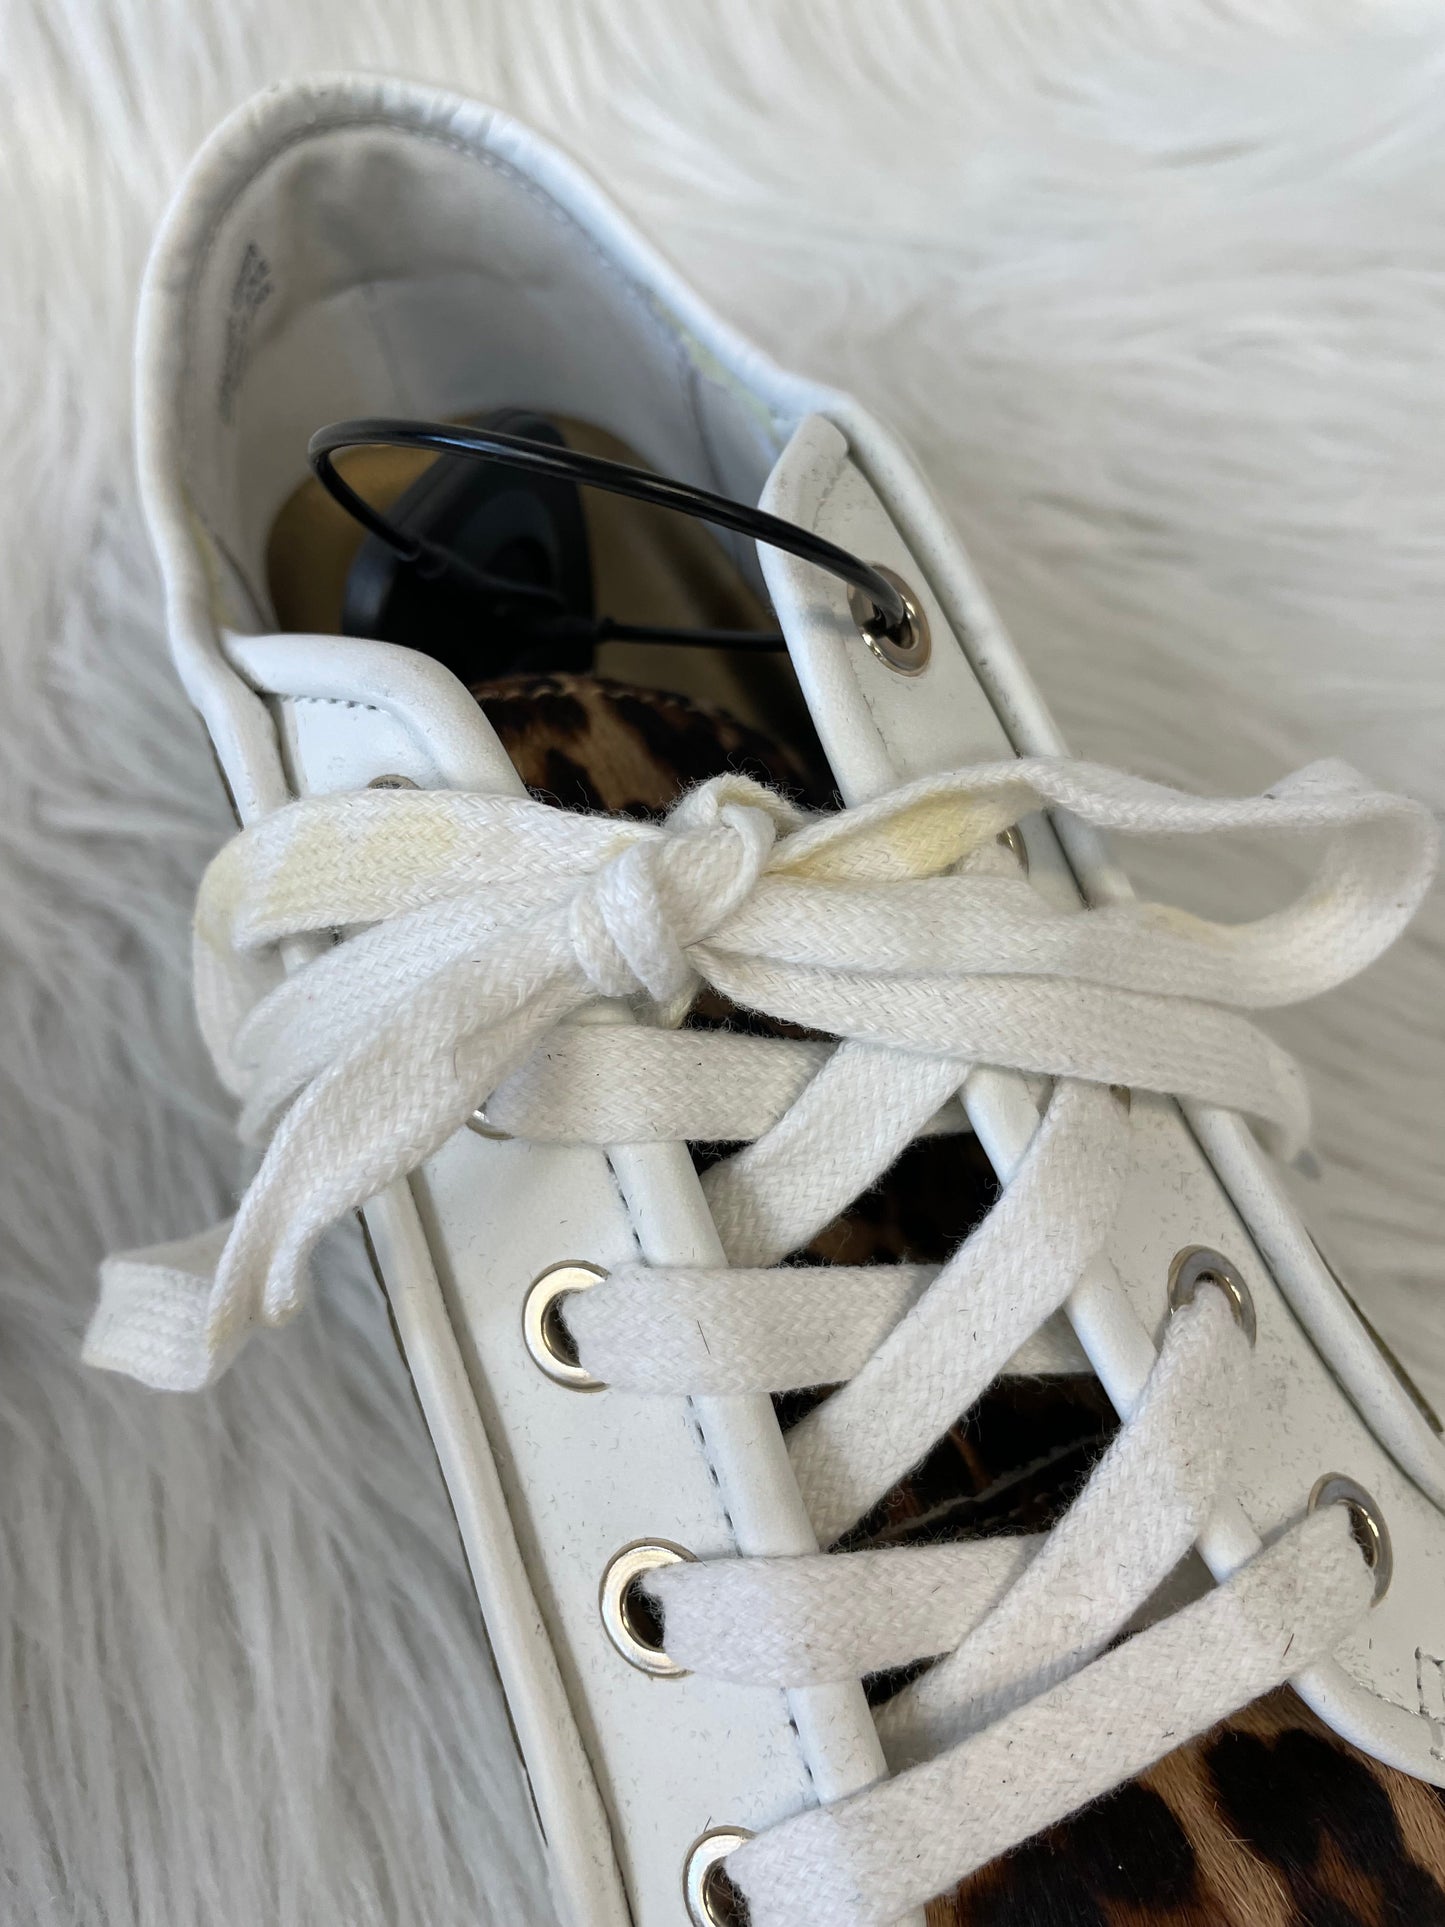 White Shoes Sneakers Ann Taylor, Size 6.5